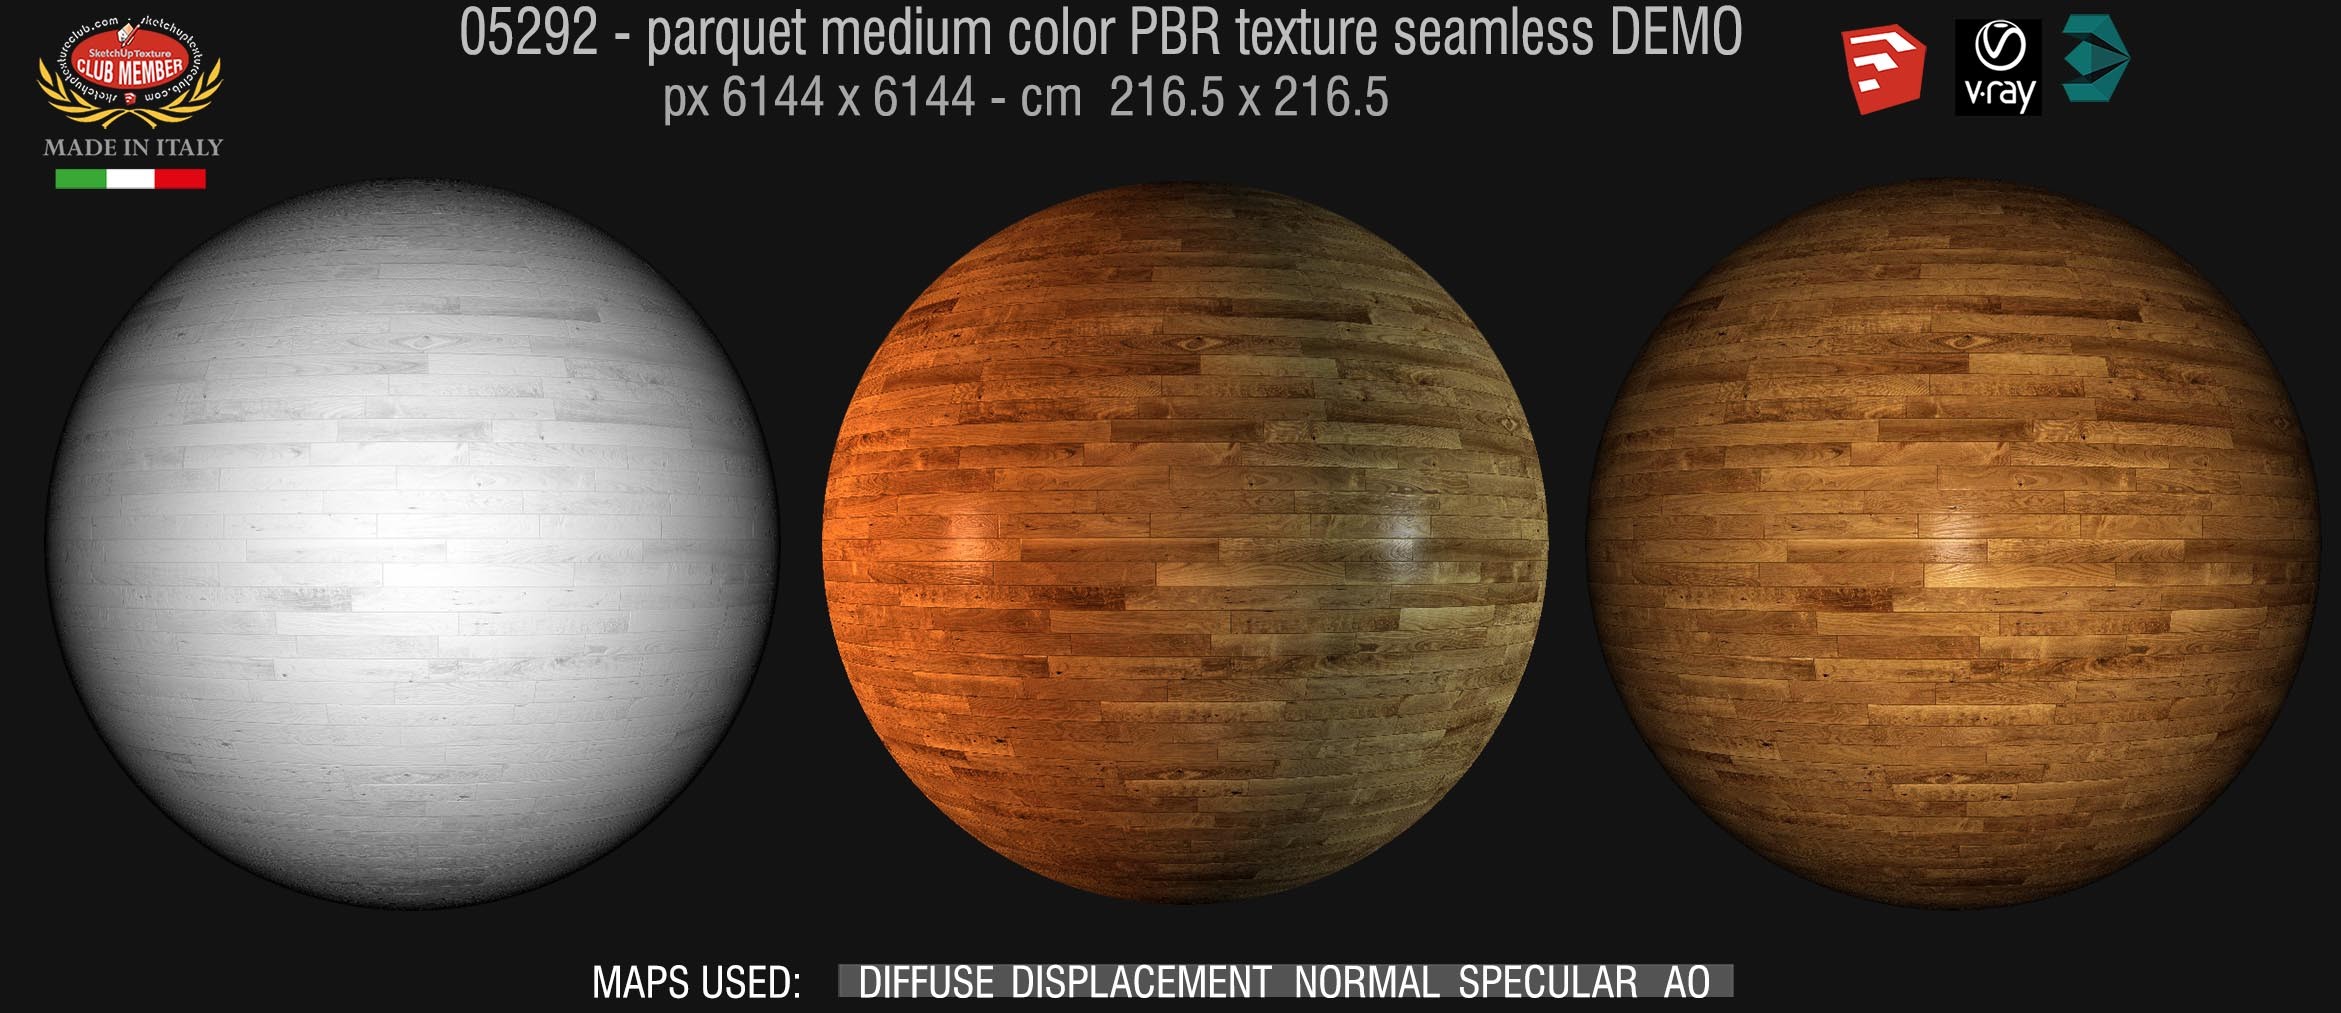 05292 parquet medium color PBR texture seamless DEMO